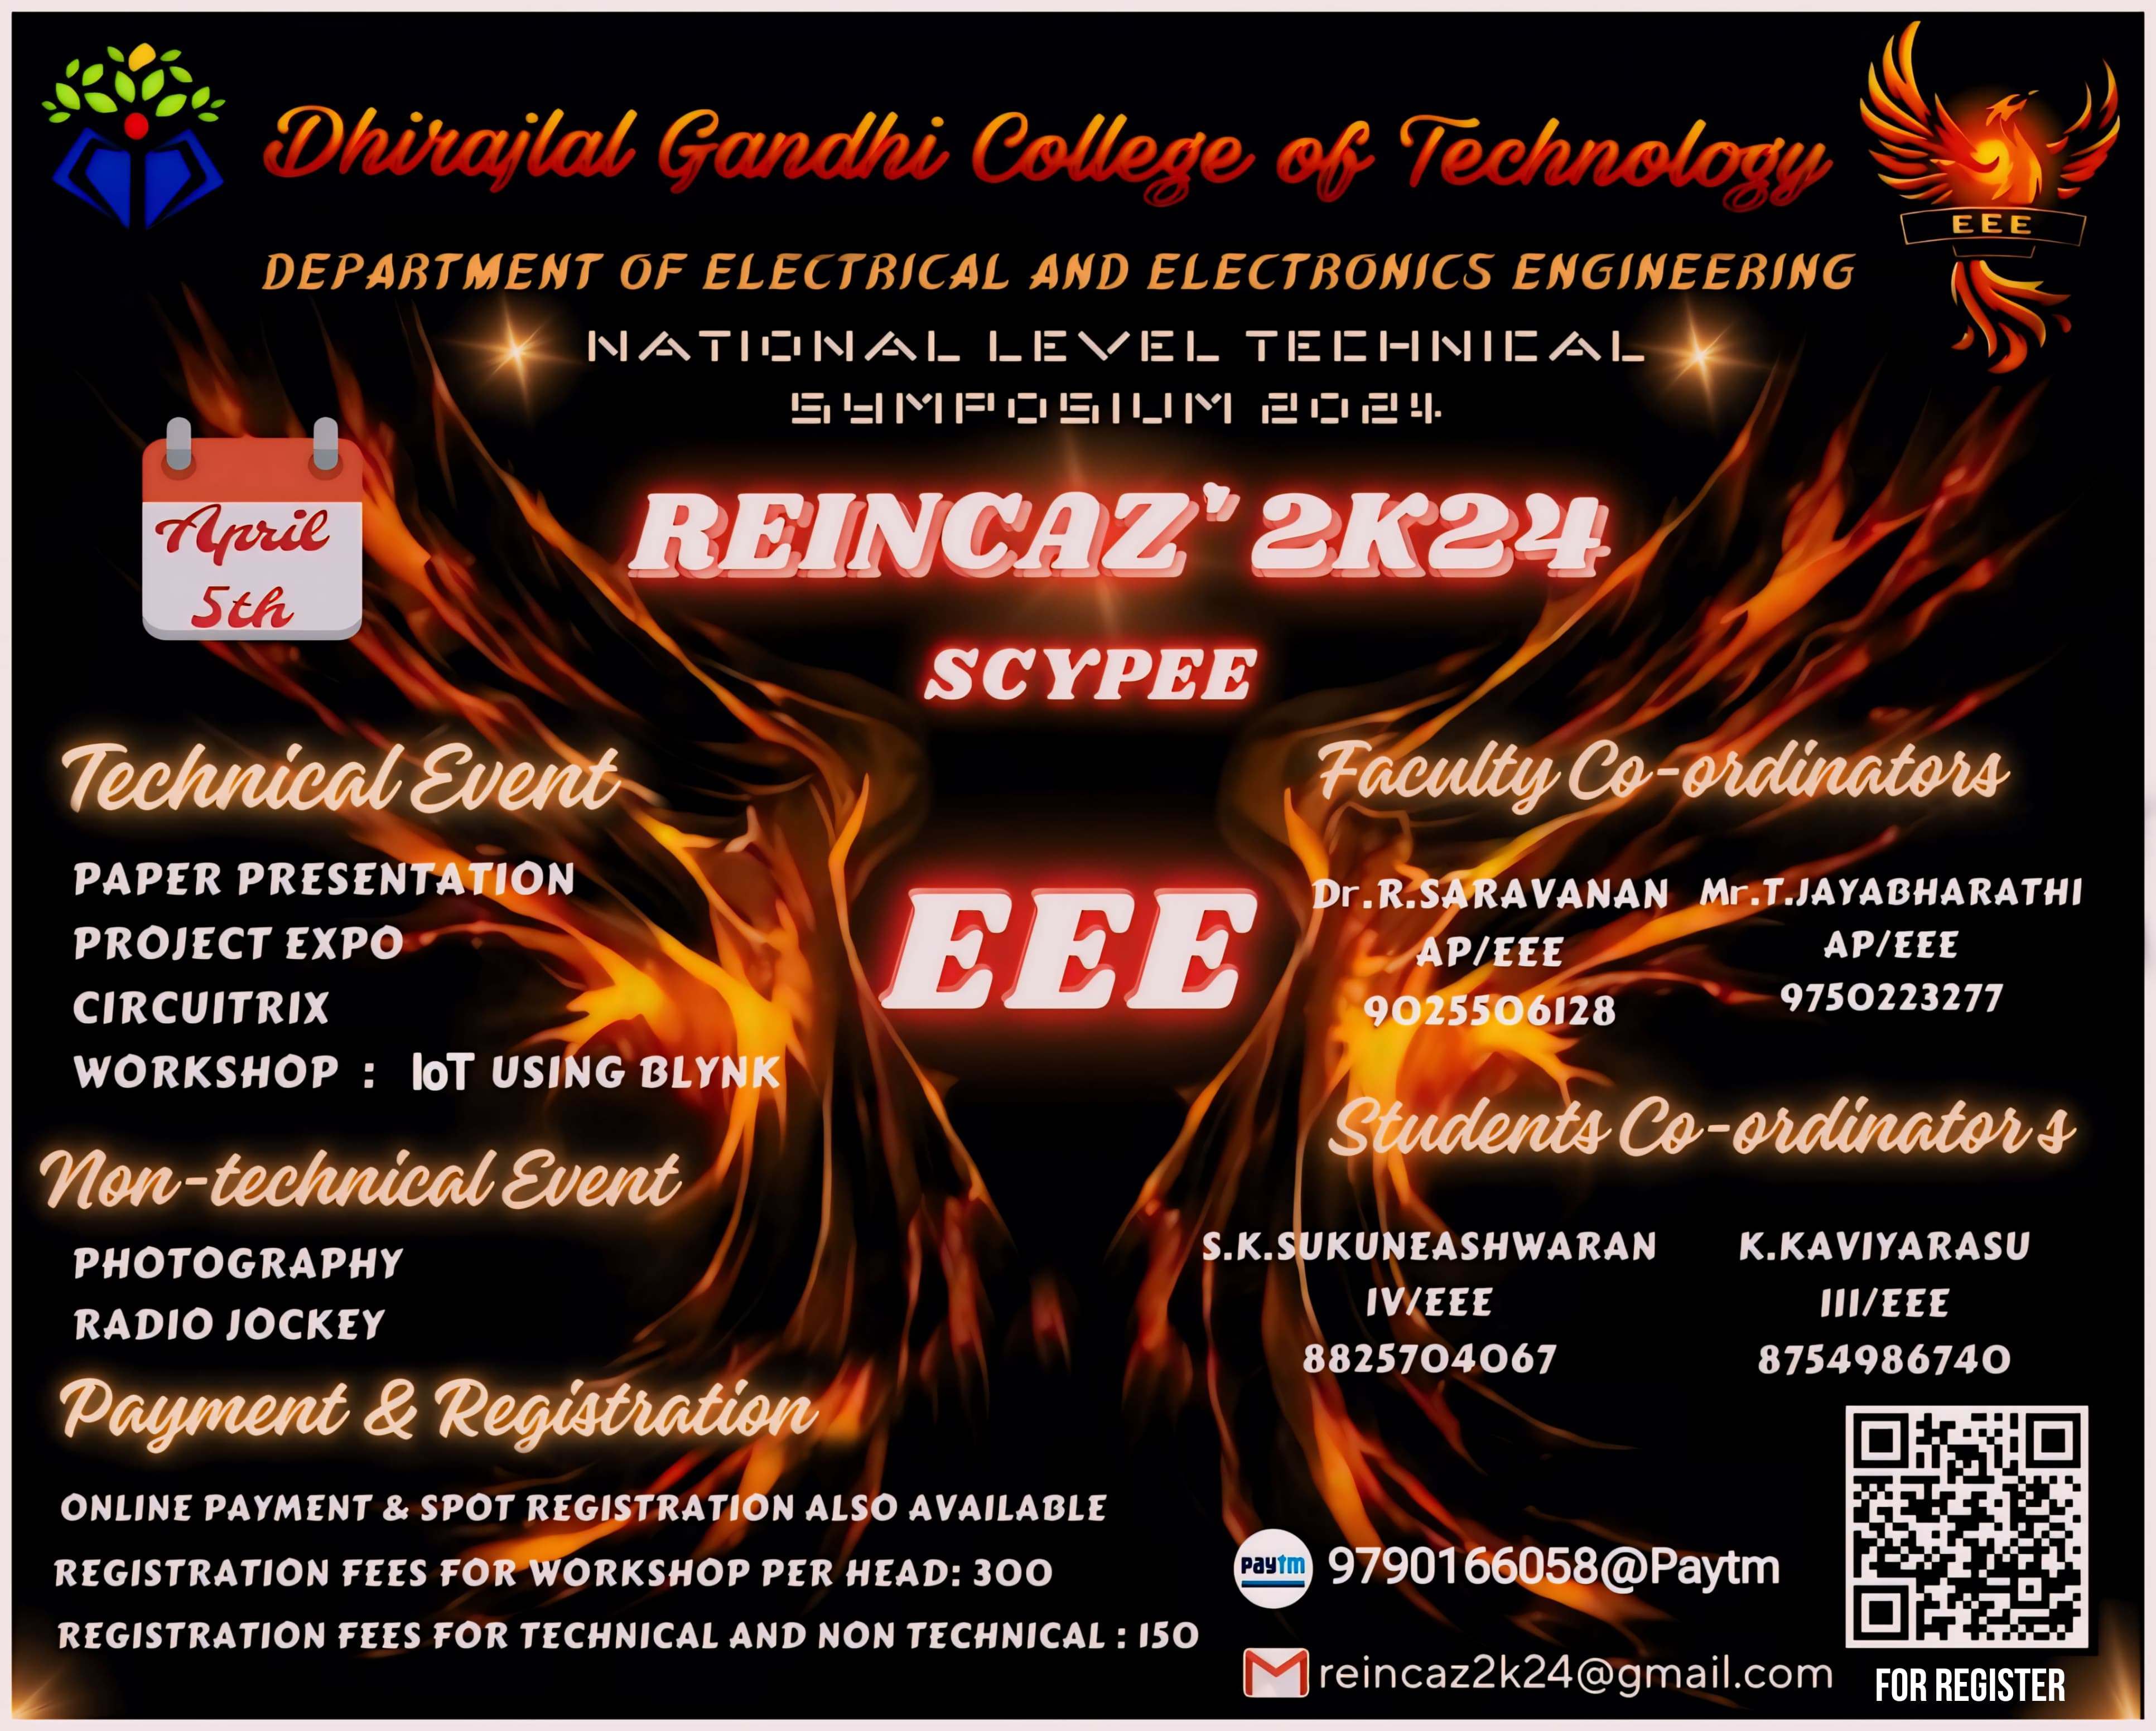 REINCAZ'2K24 is the National Level Technical Symposium